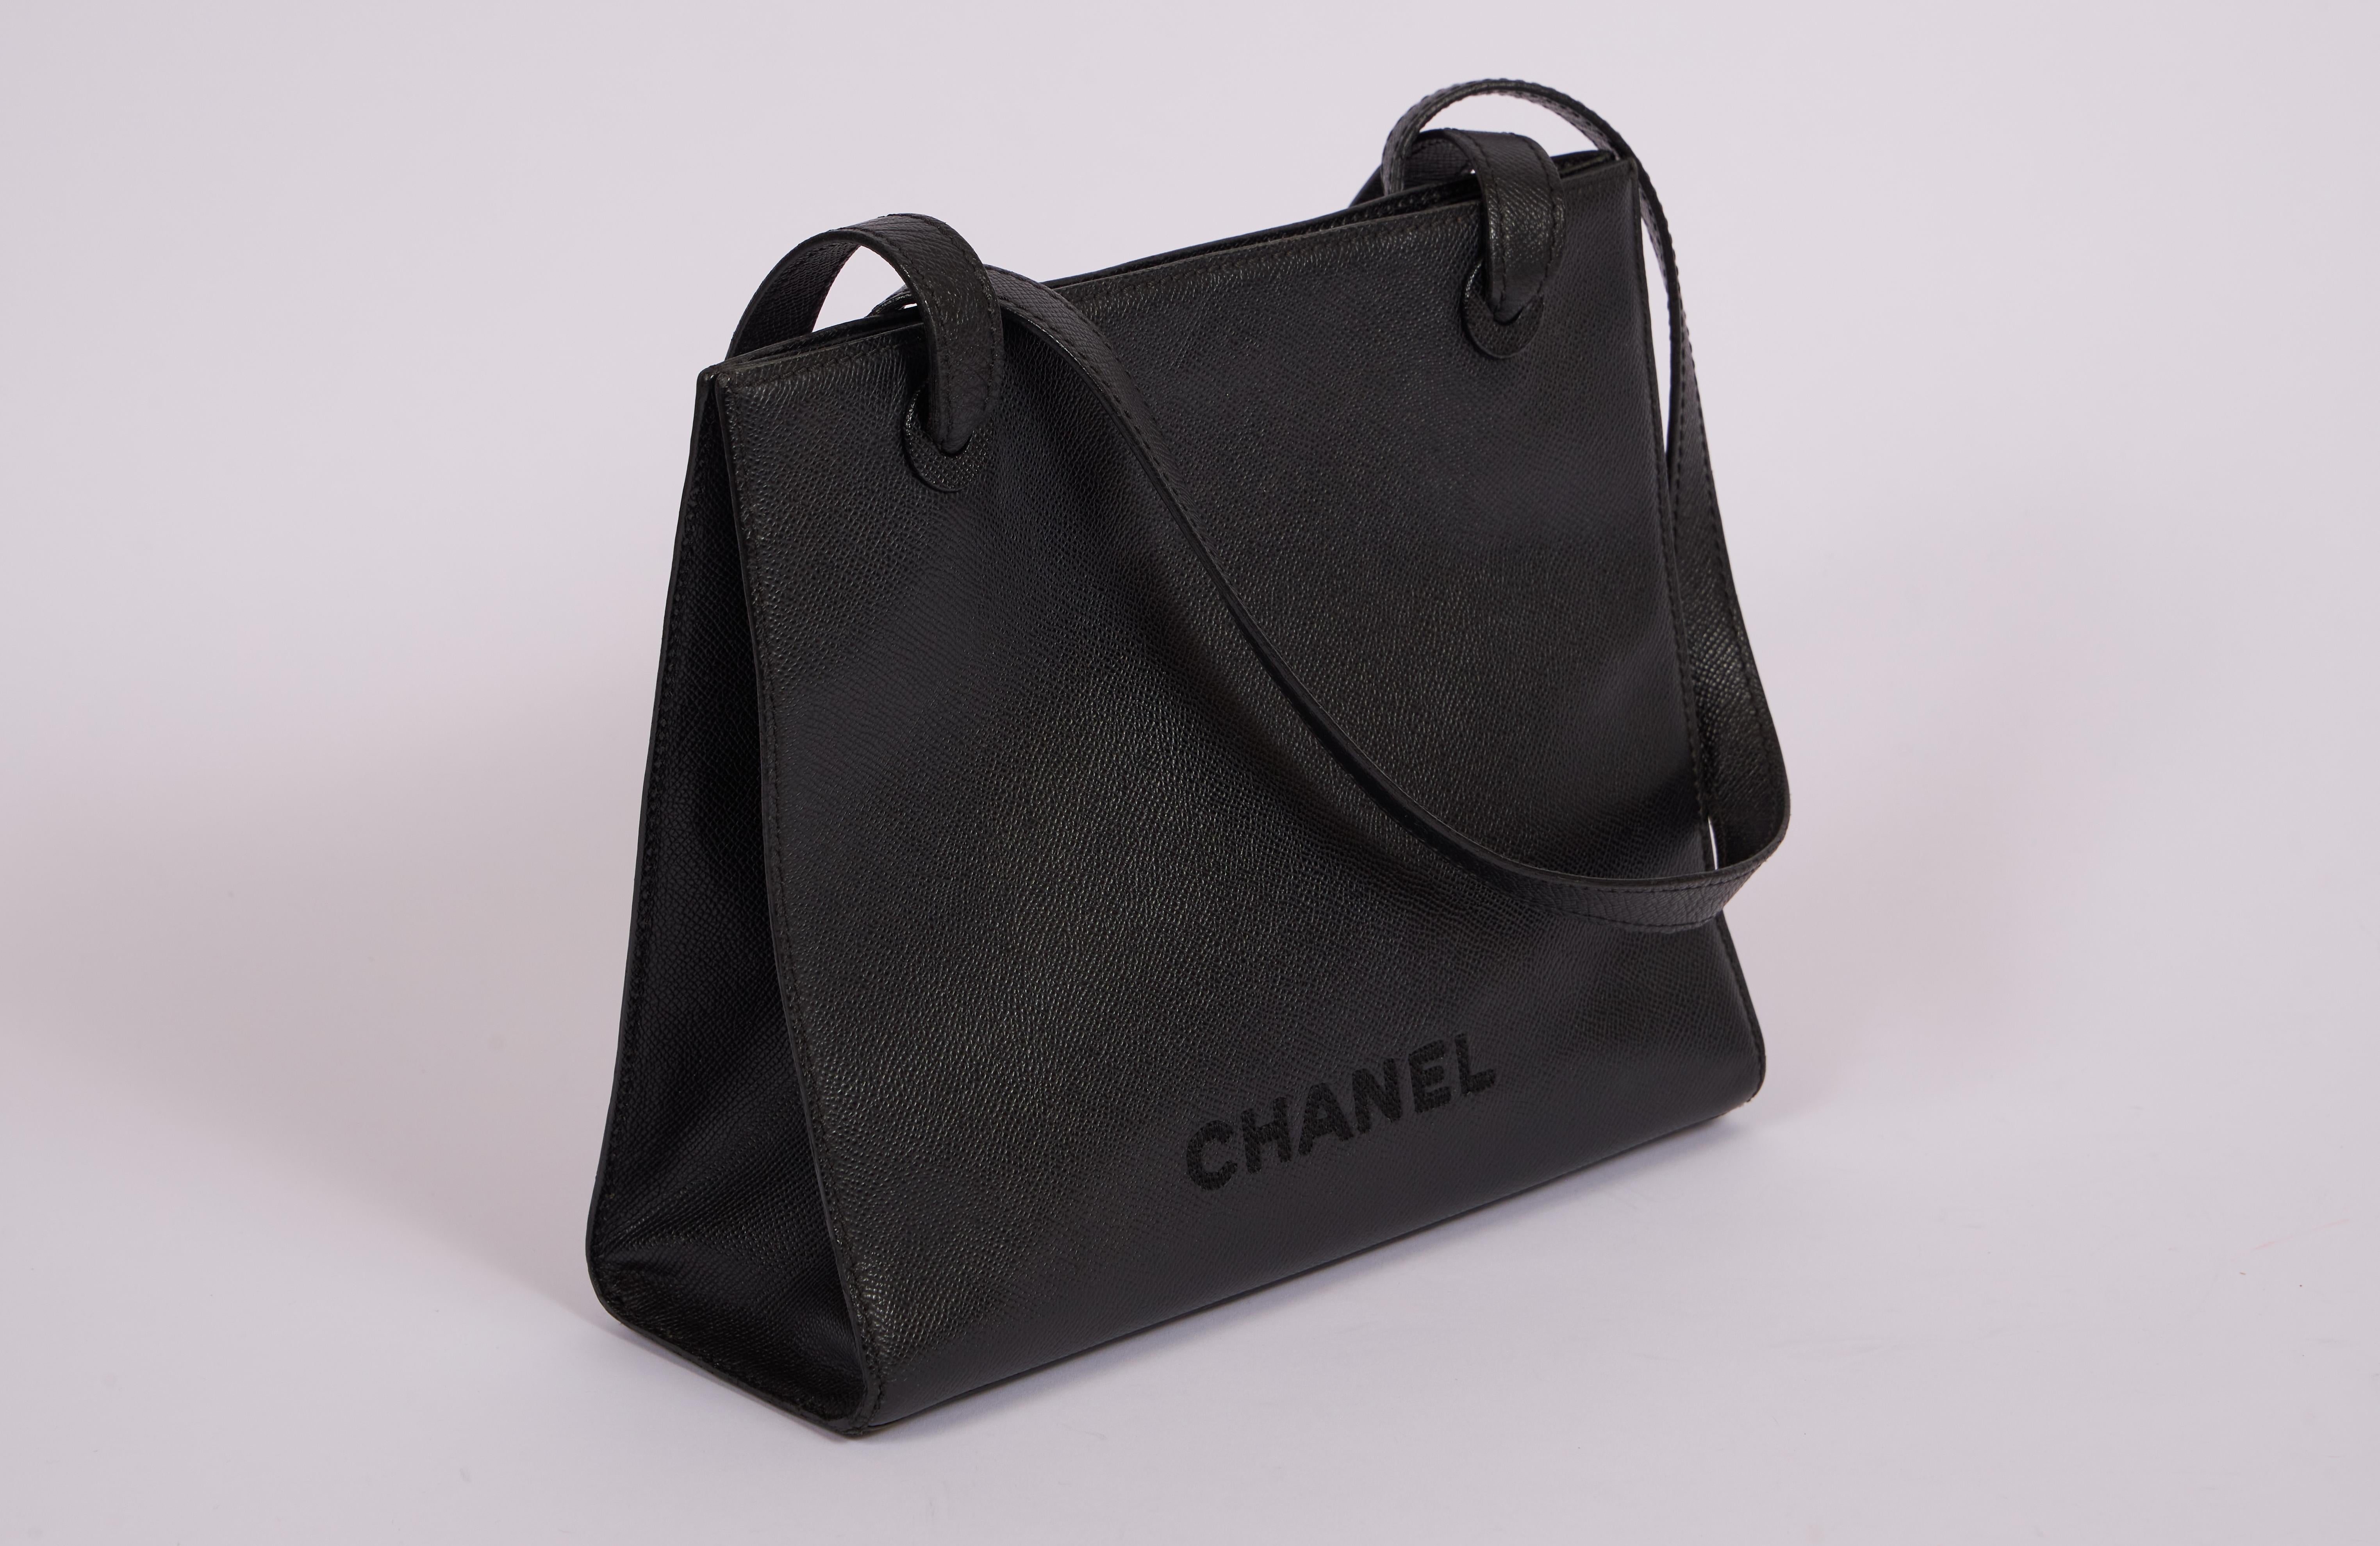 Chanel black caviar leather trapeze shoulder bag. 2 interior  zipped pockets. Shoulder drop 11